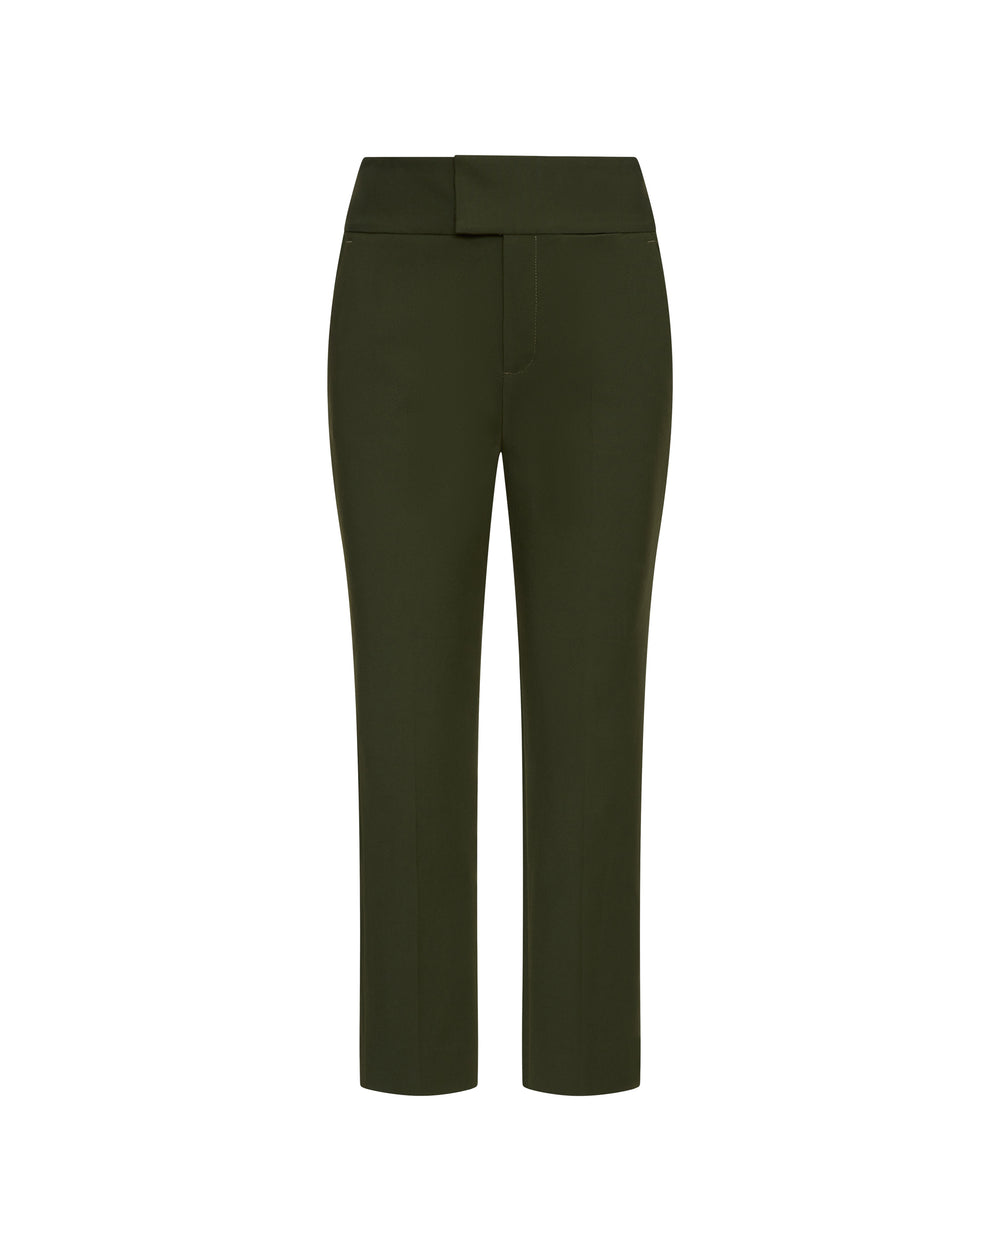 Club Monaco Women's Lillean jasper Pants Green Size 00P Retail $169 | eBay